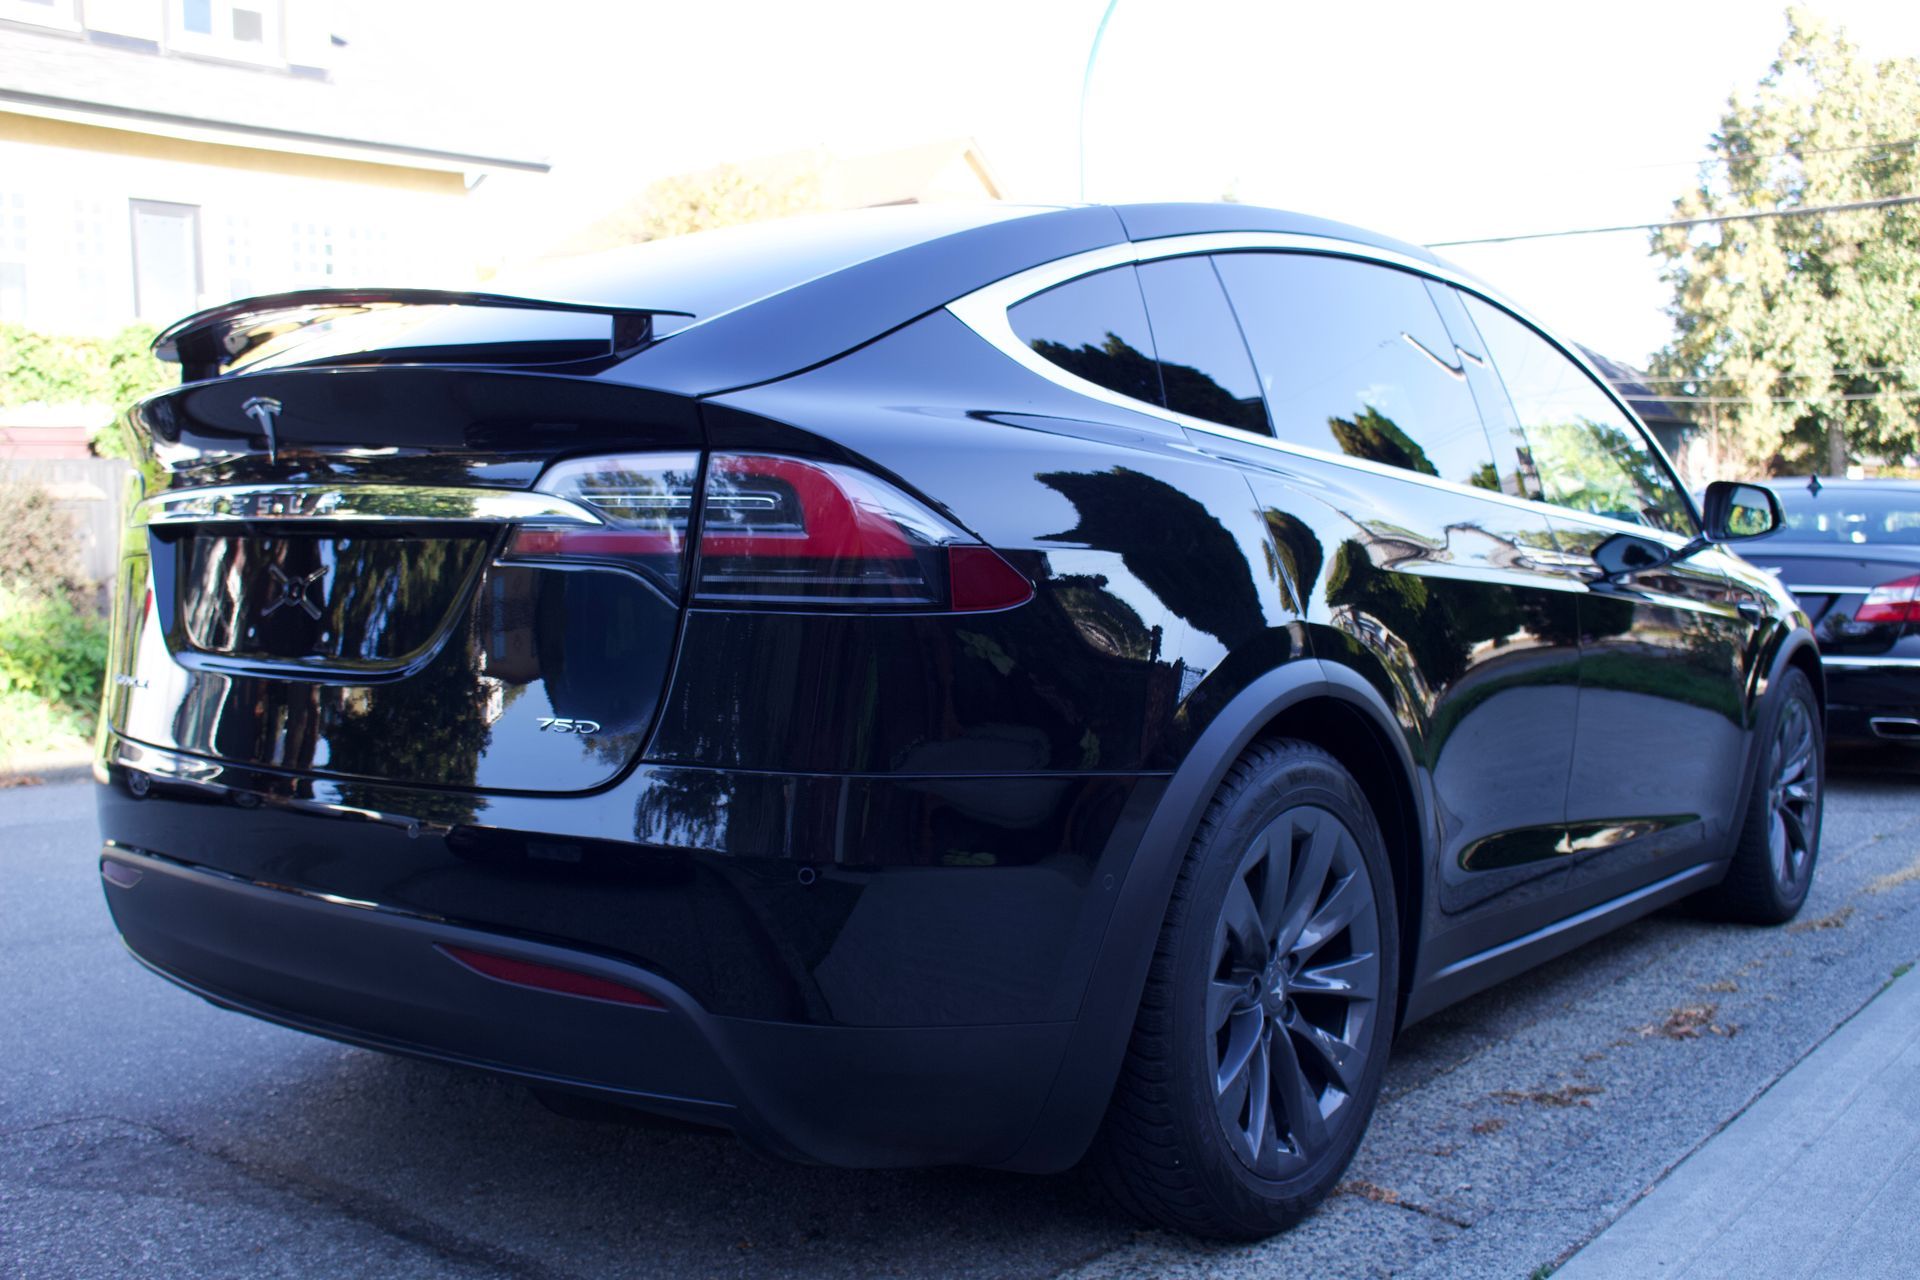 Black Tesla Model X from behind